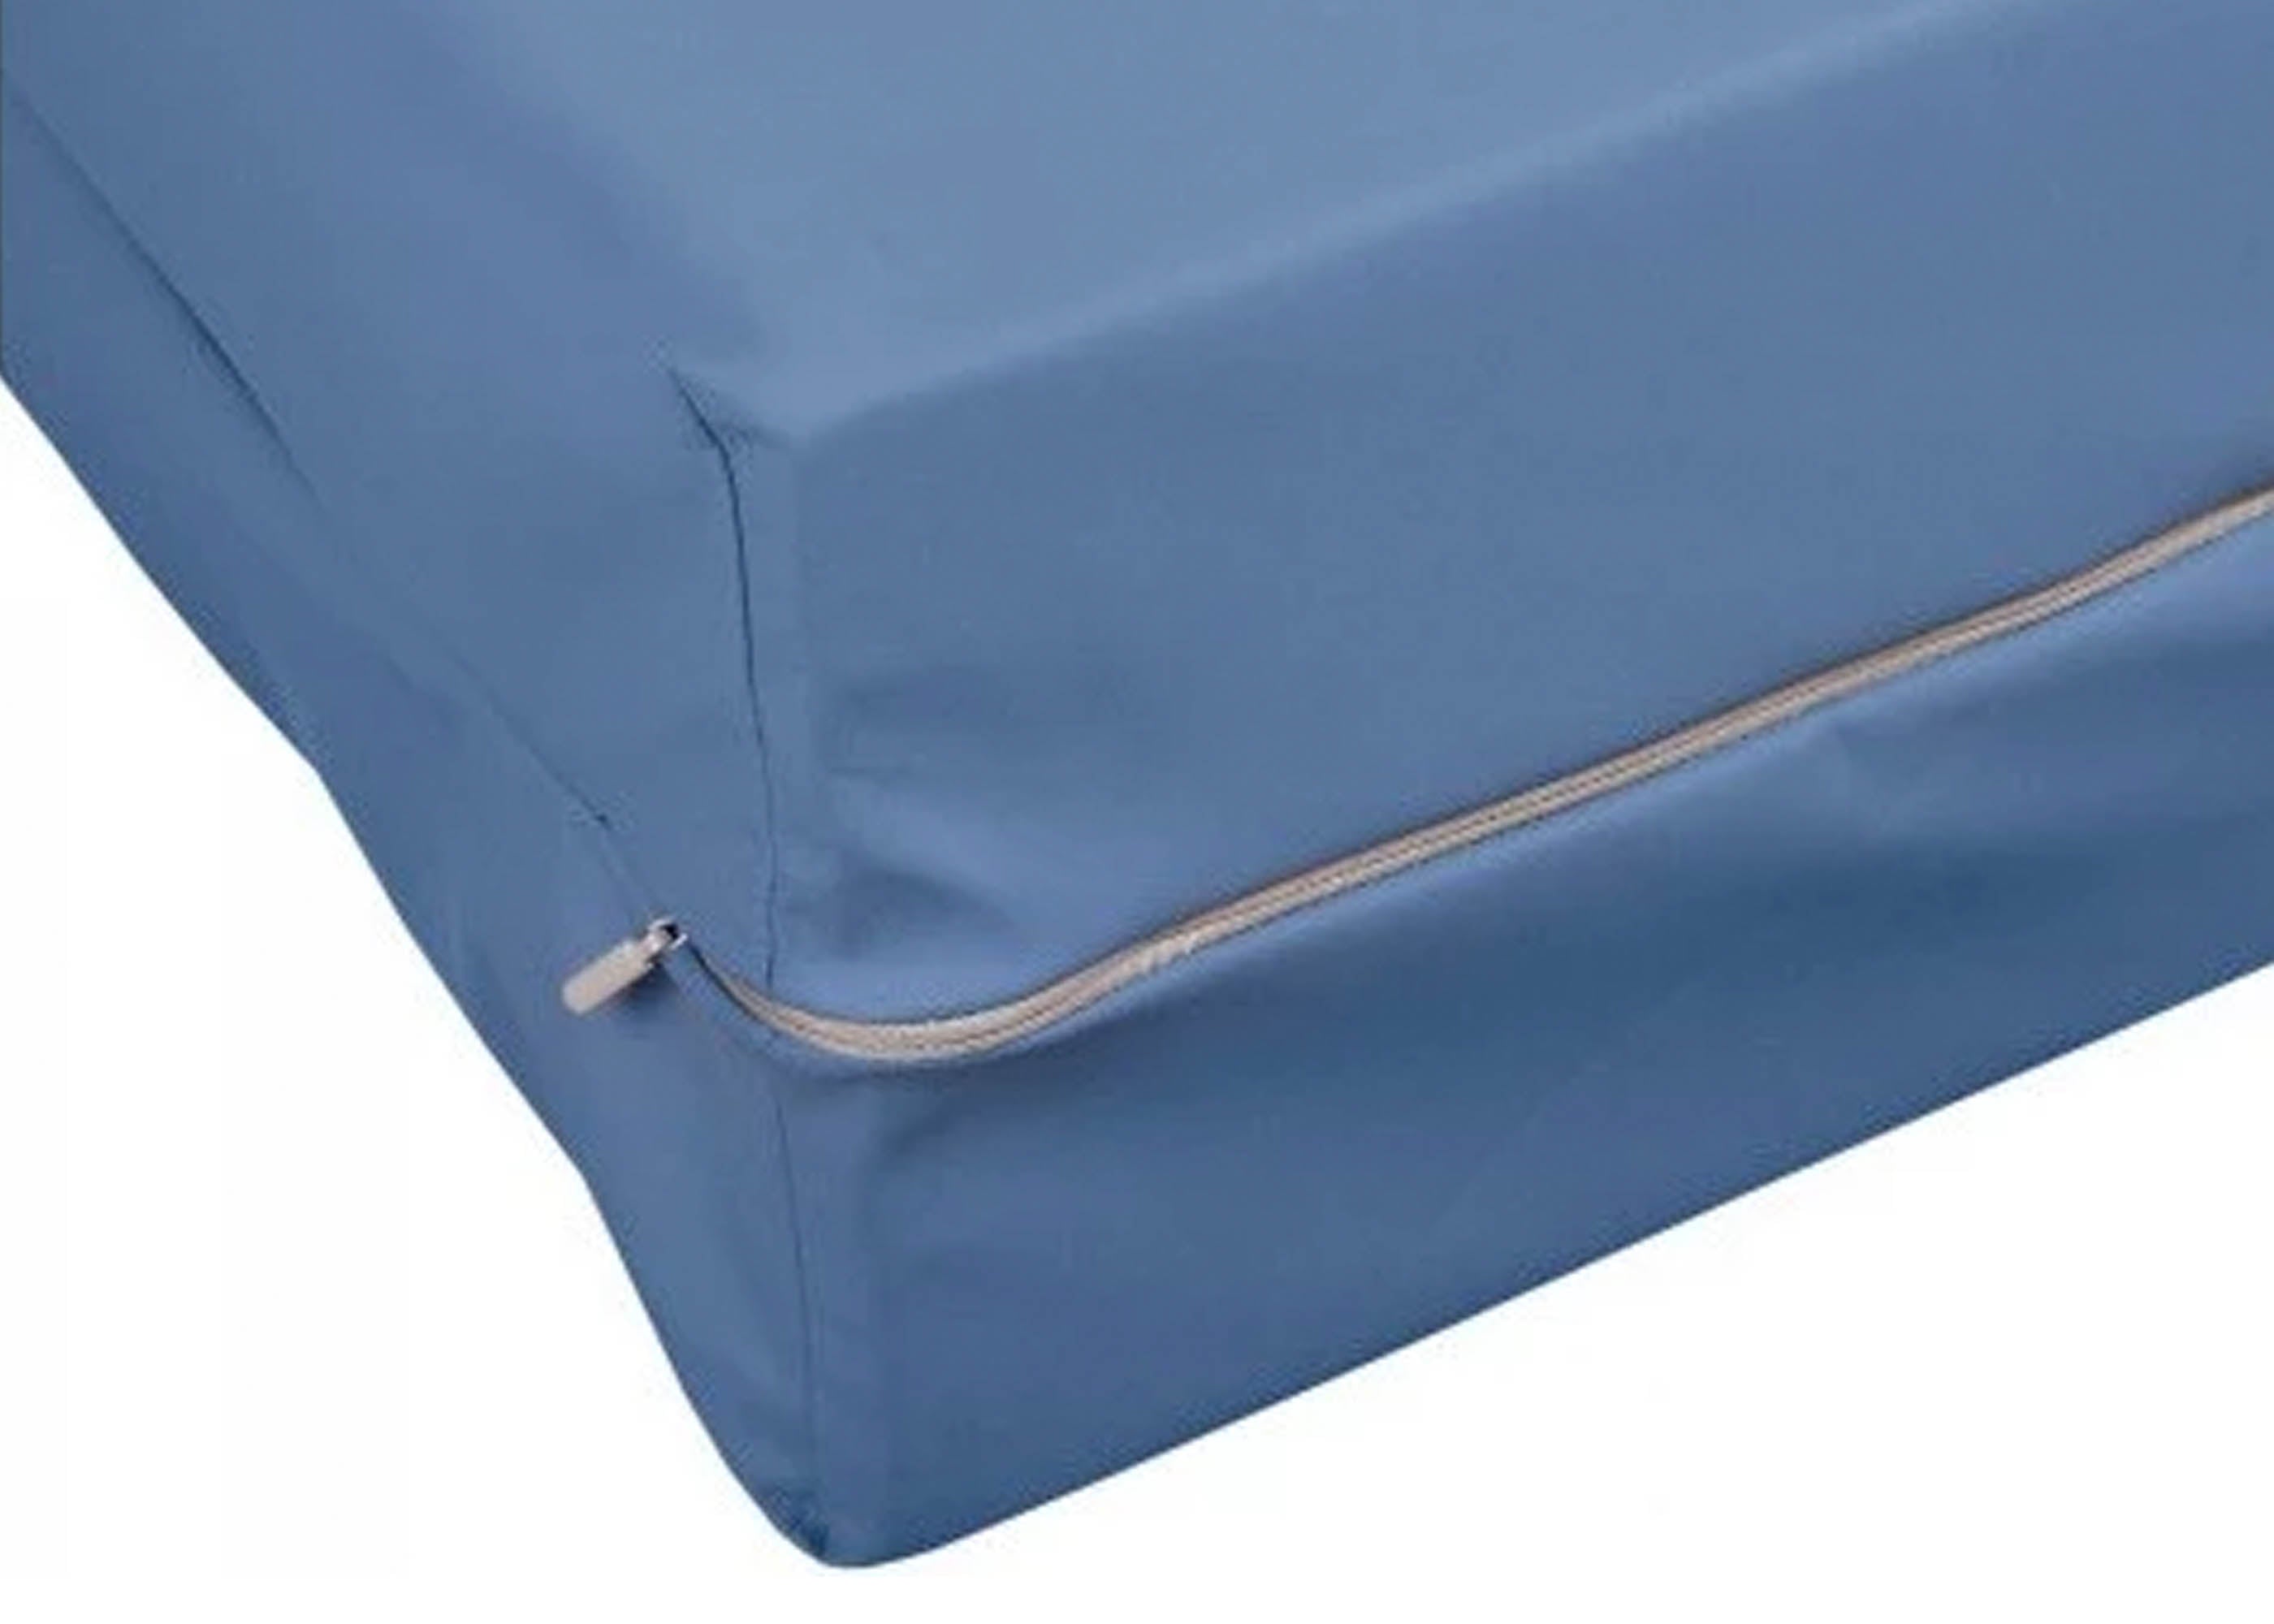 fully enclosed waterproof mattress protector pilow top